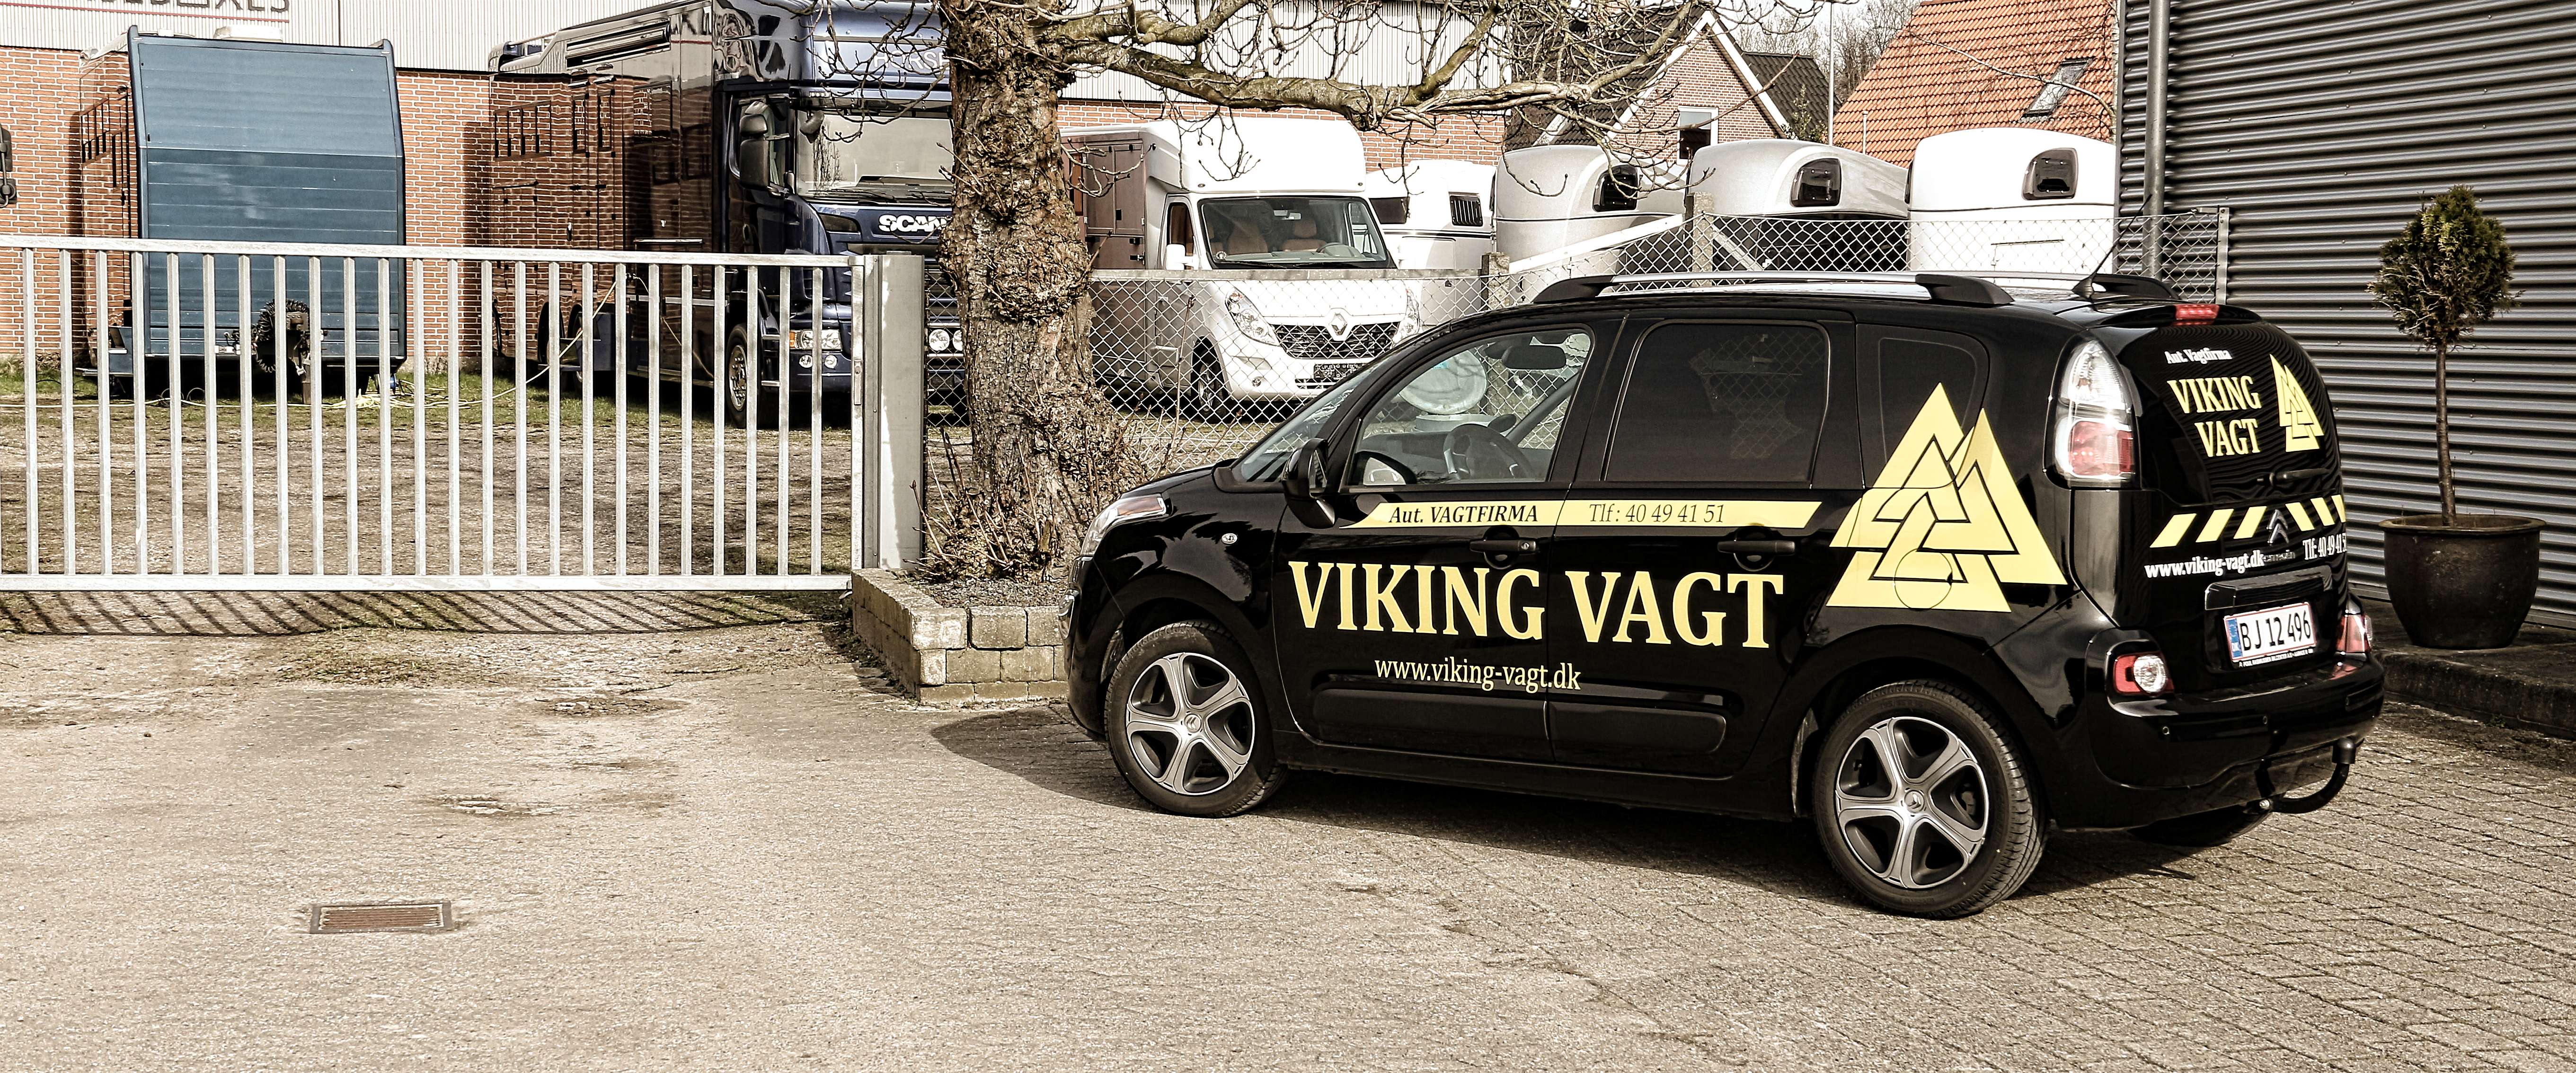 Viking-vagt-firma-3 copy.jpg